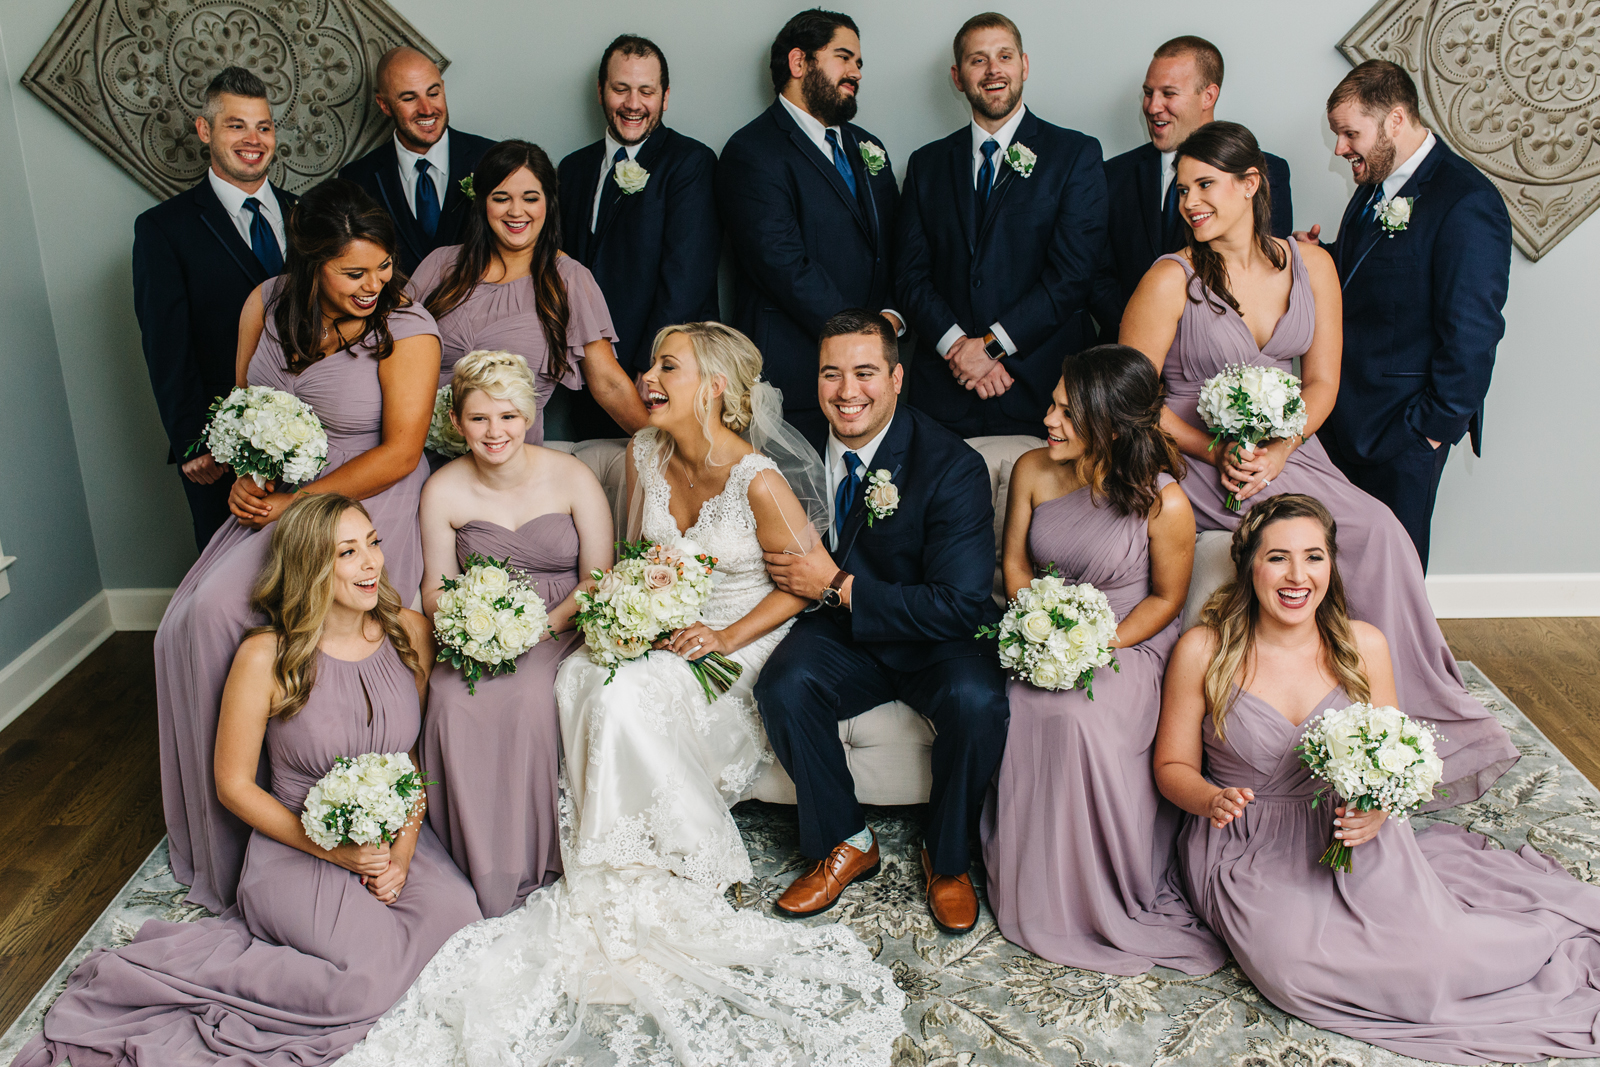 Nashville TN Wedding Photographer Laura K. Allen | 2017 Best of Weddings, Engagements, and Portraits